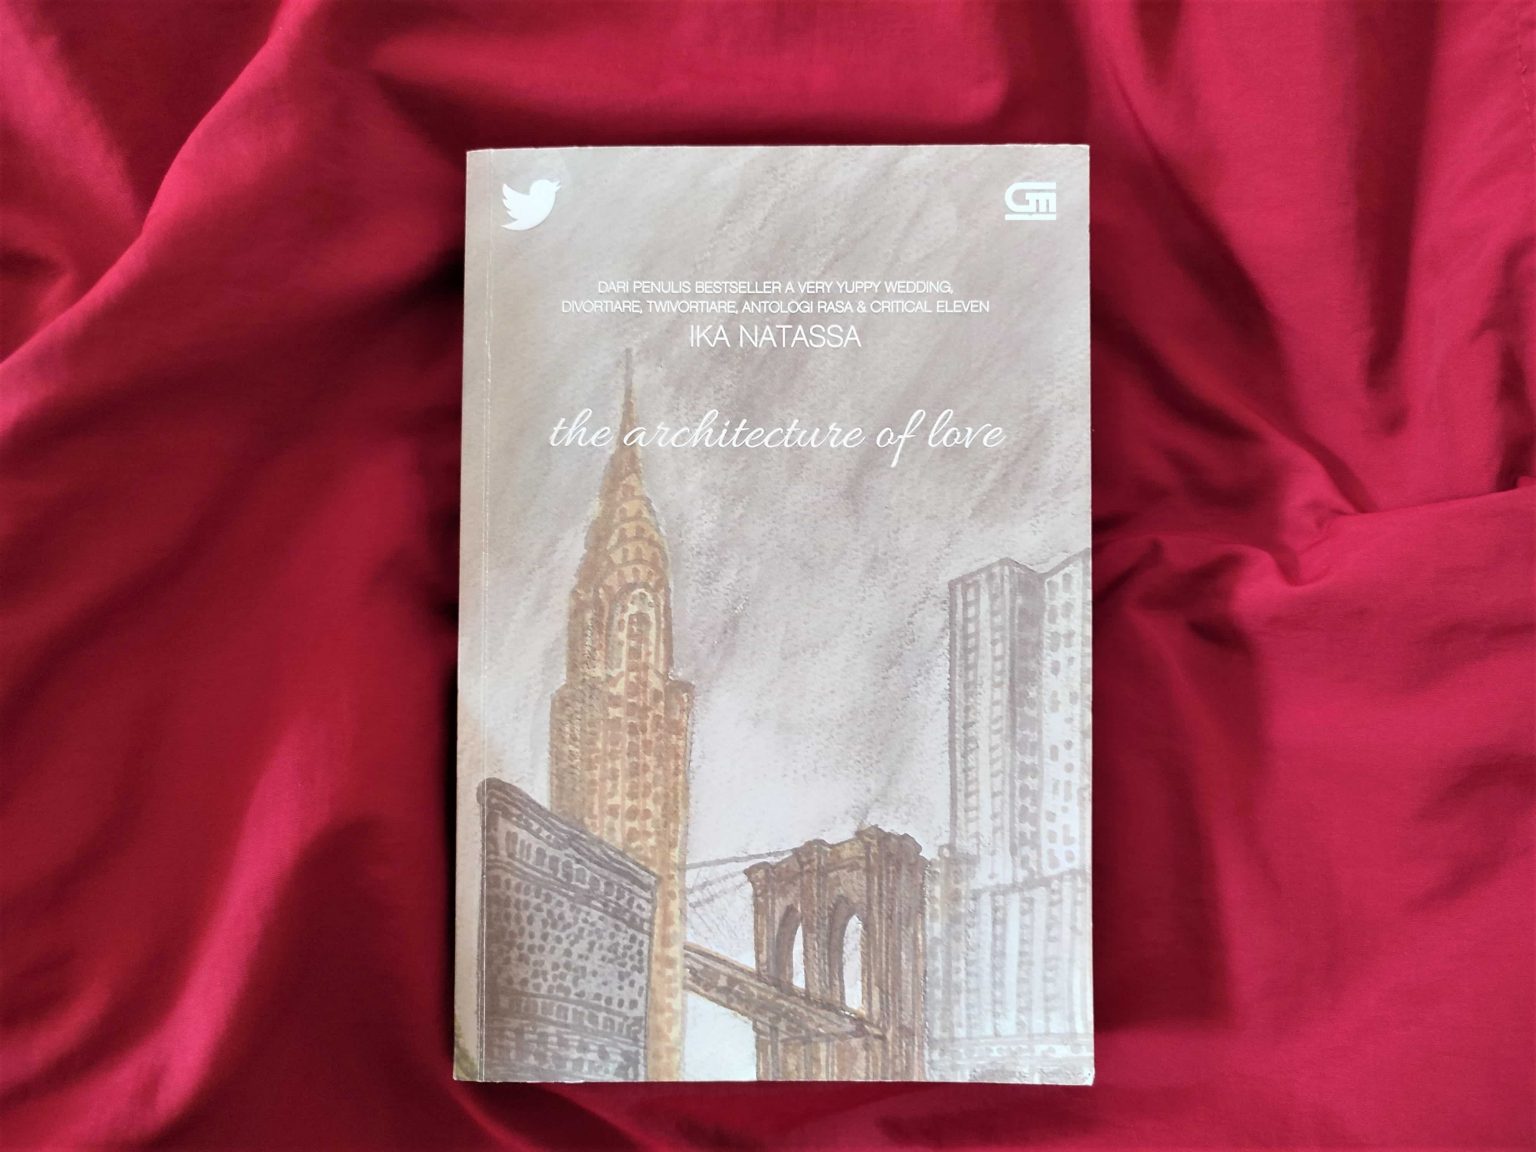 Cover Depan Novel The Architecture Of Love Ika Natassa 1536x1152 